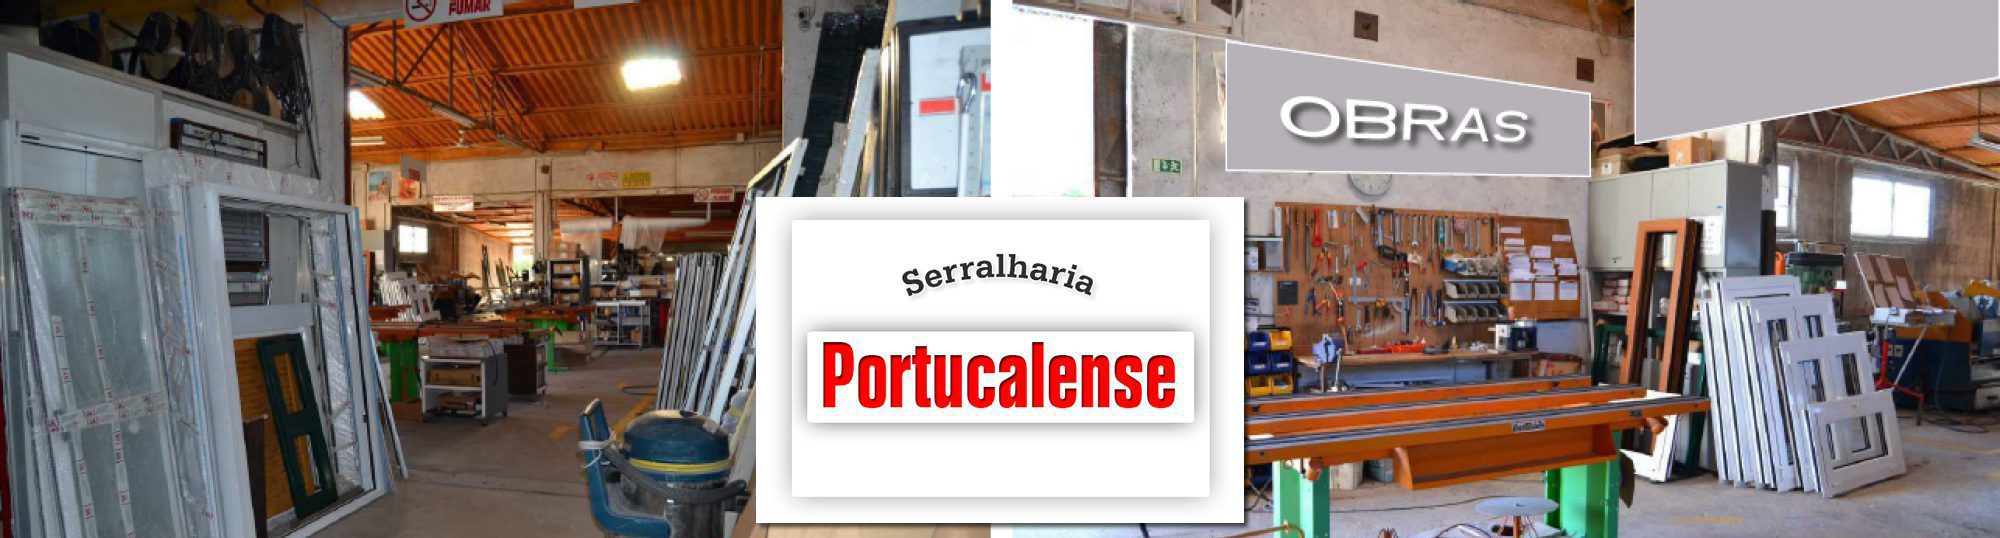 Serralharia - Portucalense